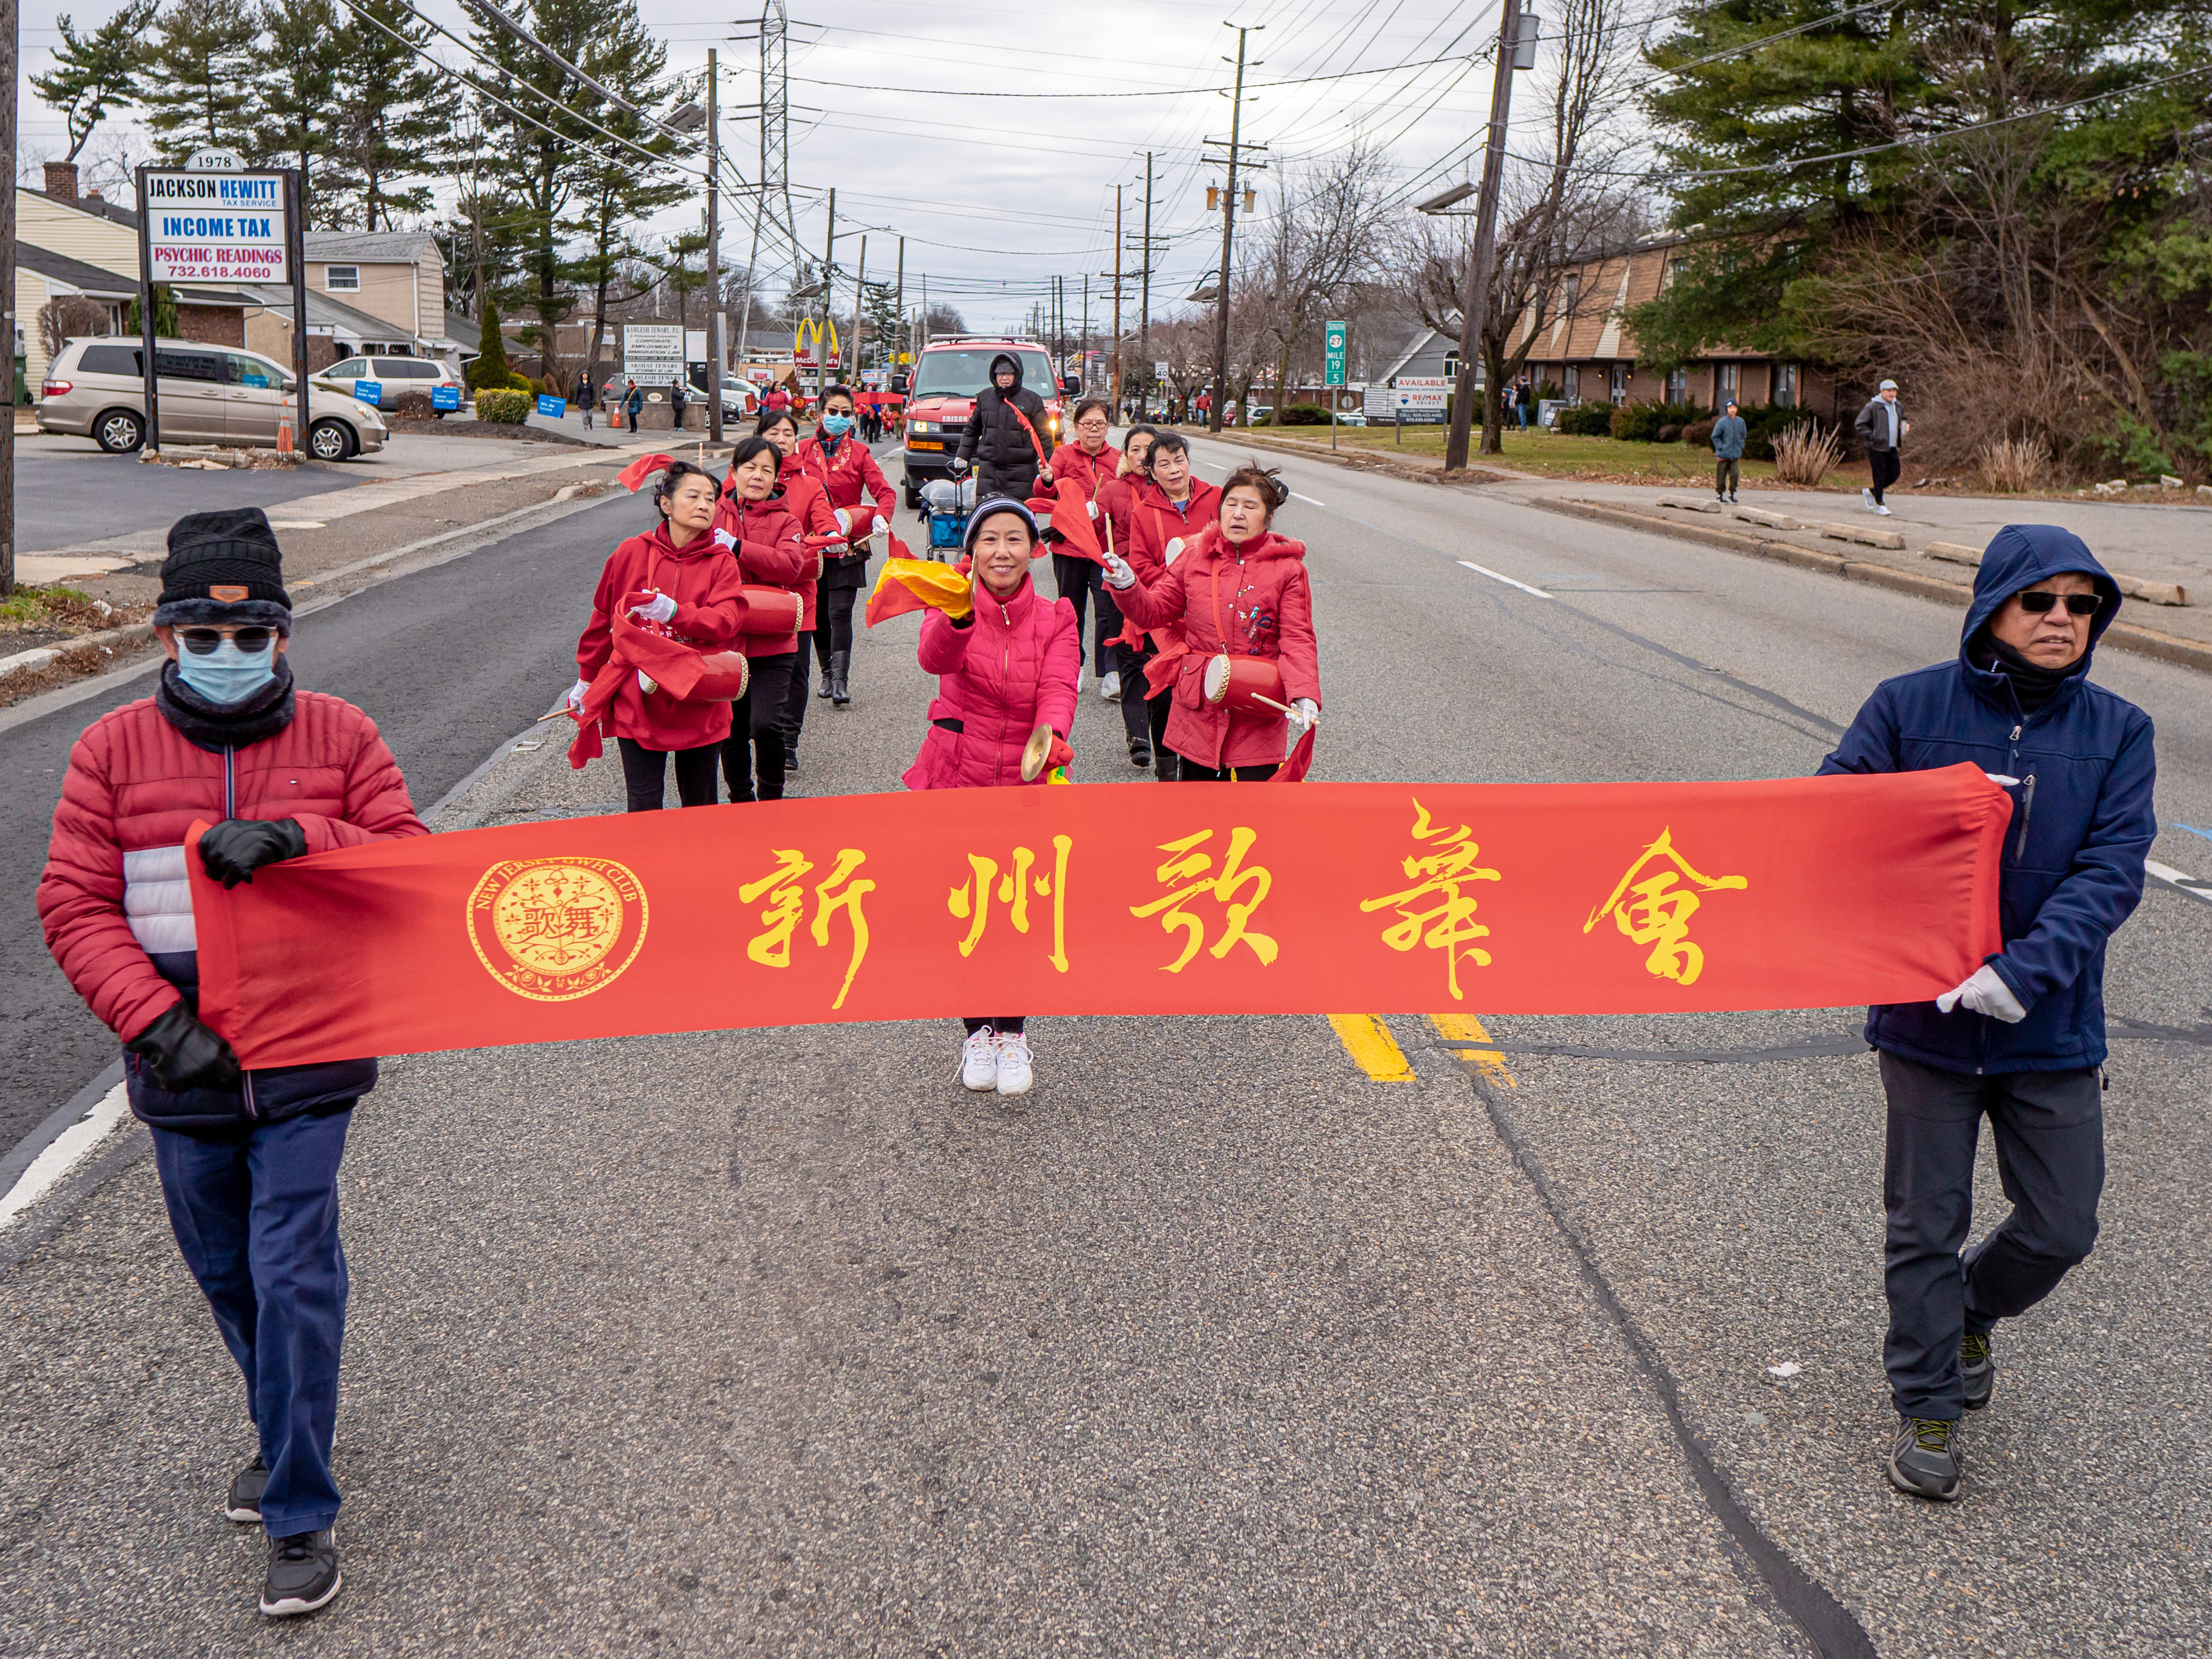 Edison Township celebrates Chinese Lunar New Year 